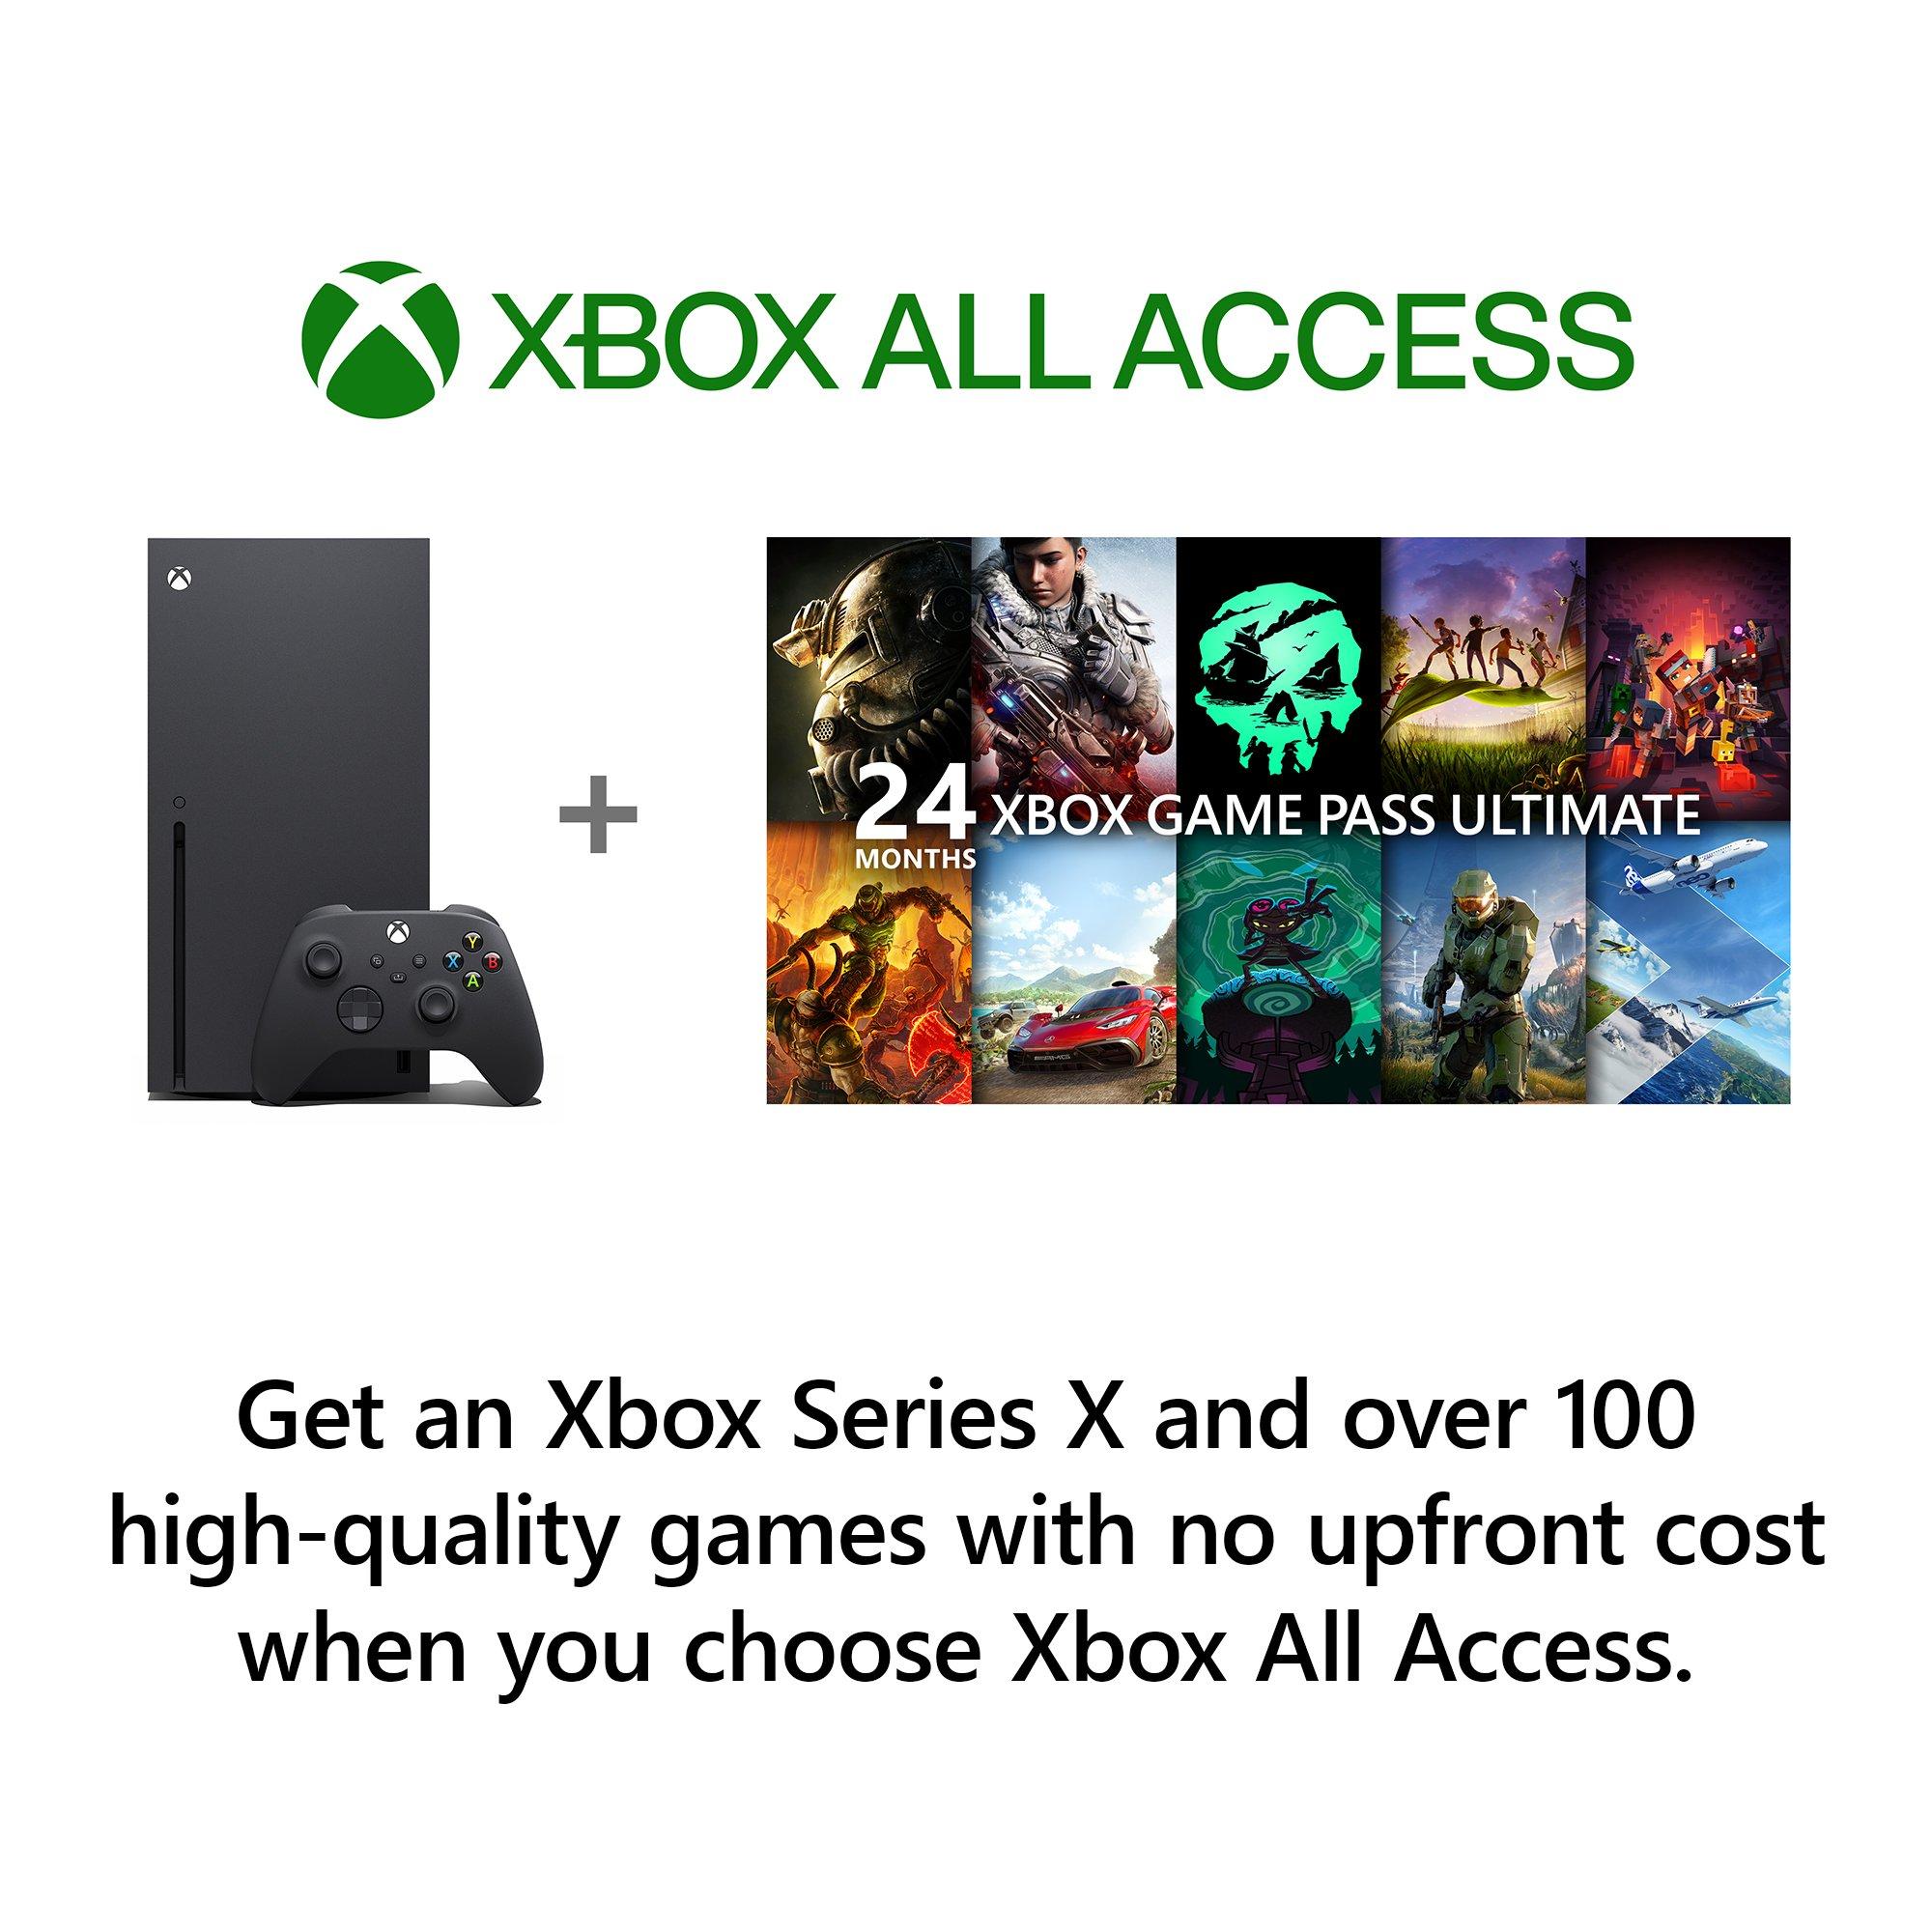 Xbox Series XS Consoles - Best Buy